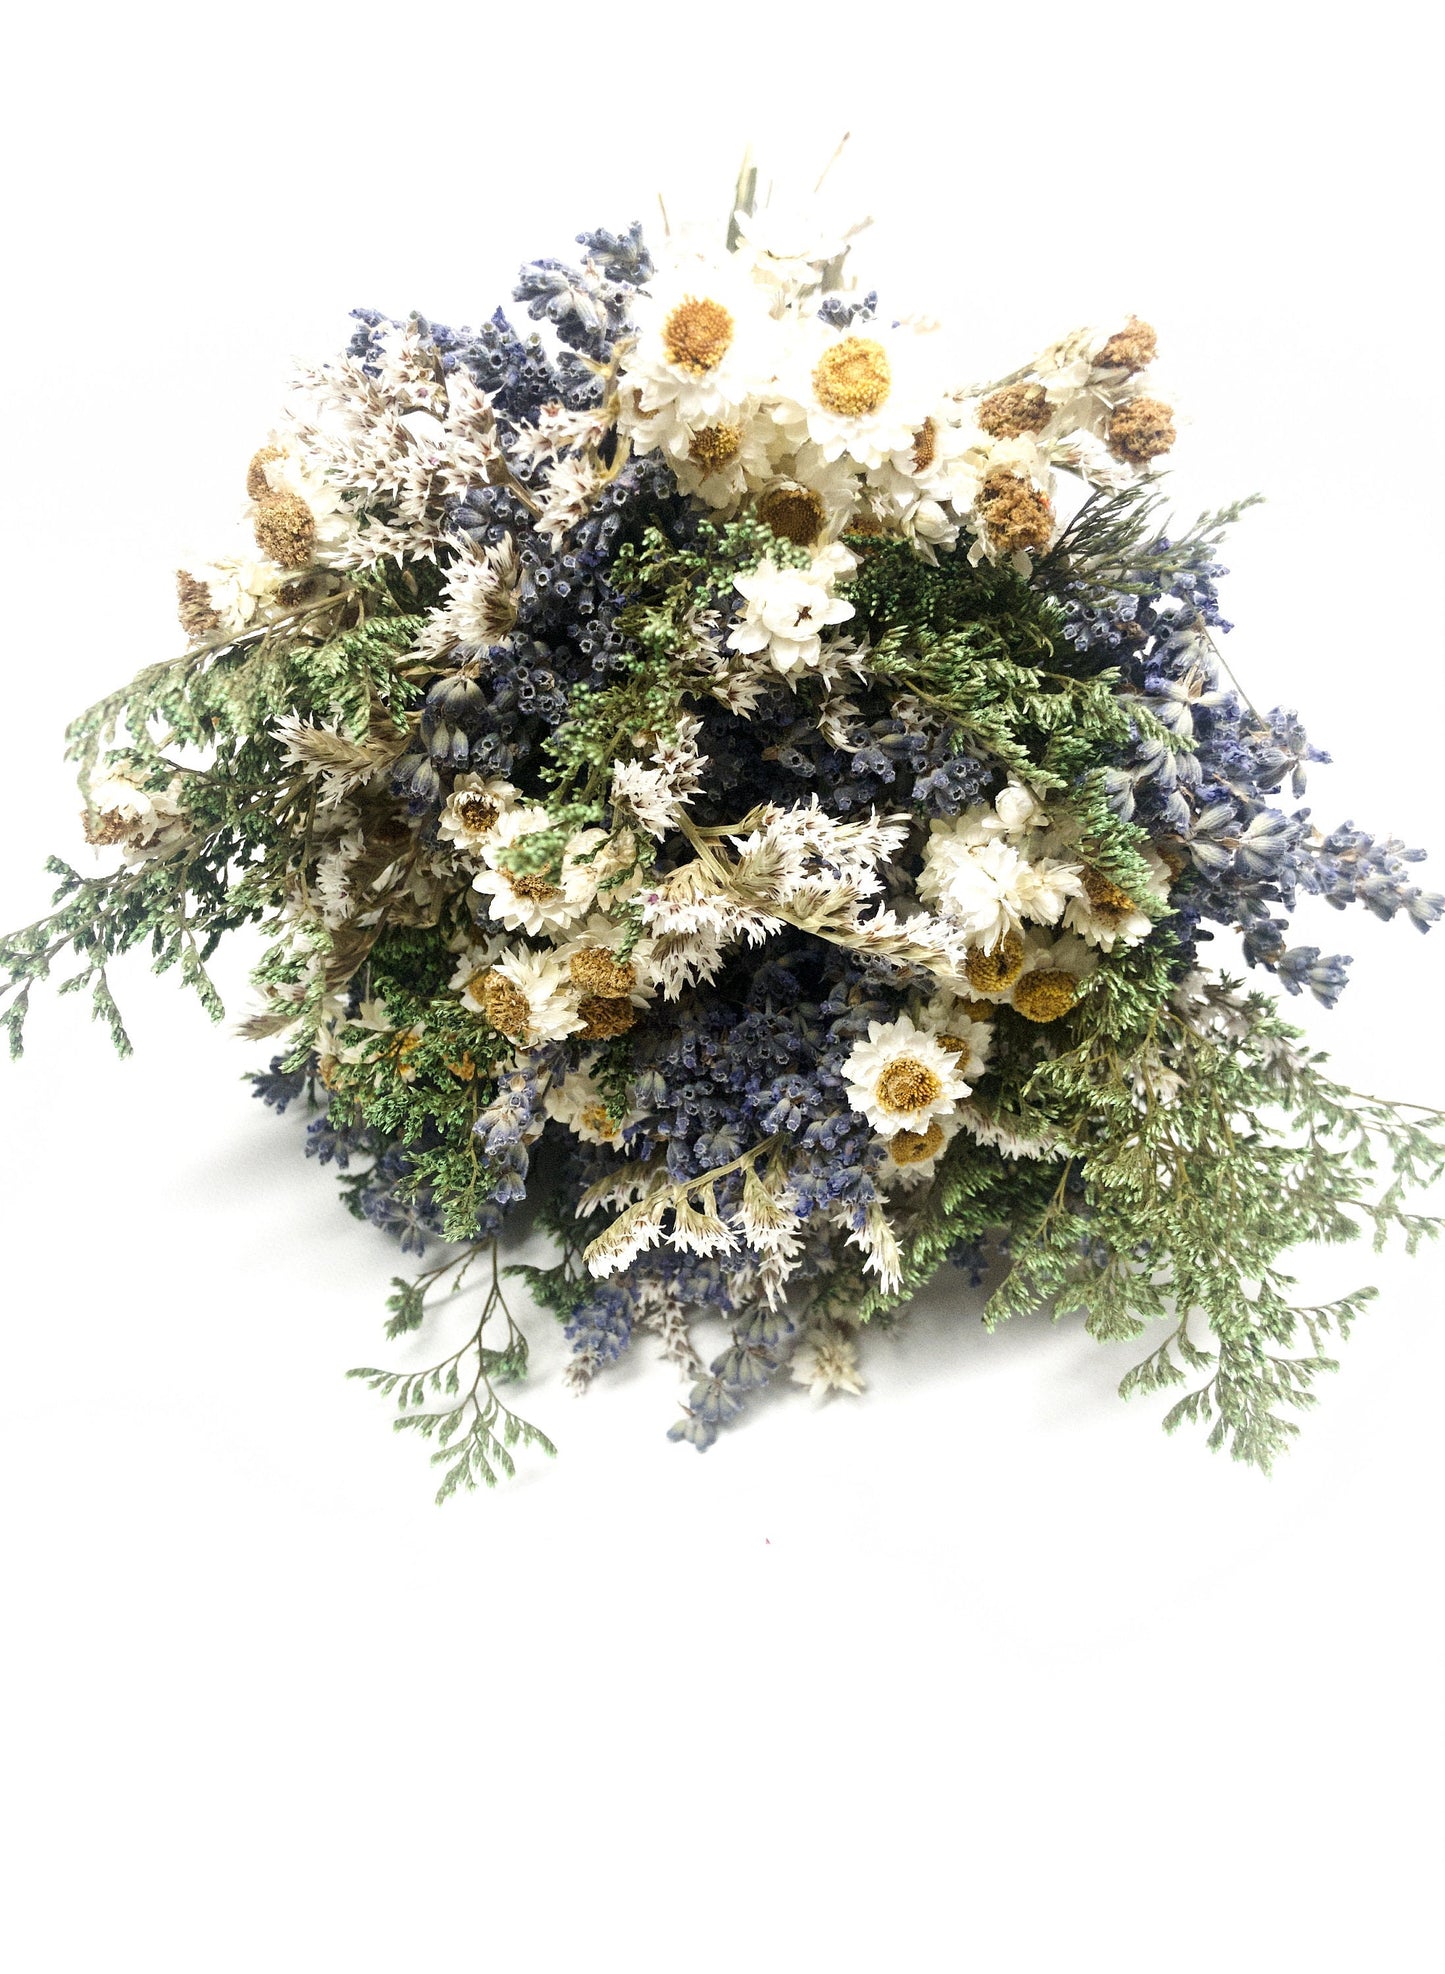 Wedding Bouquet, Fall Decor, Throw bouquet, Lavender, Ammobium, Green Caspia, German Statice, House Decoration, Dried Flowers, Natural